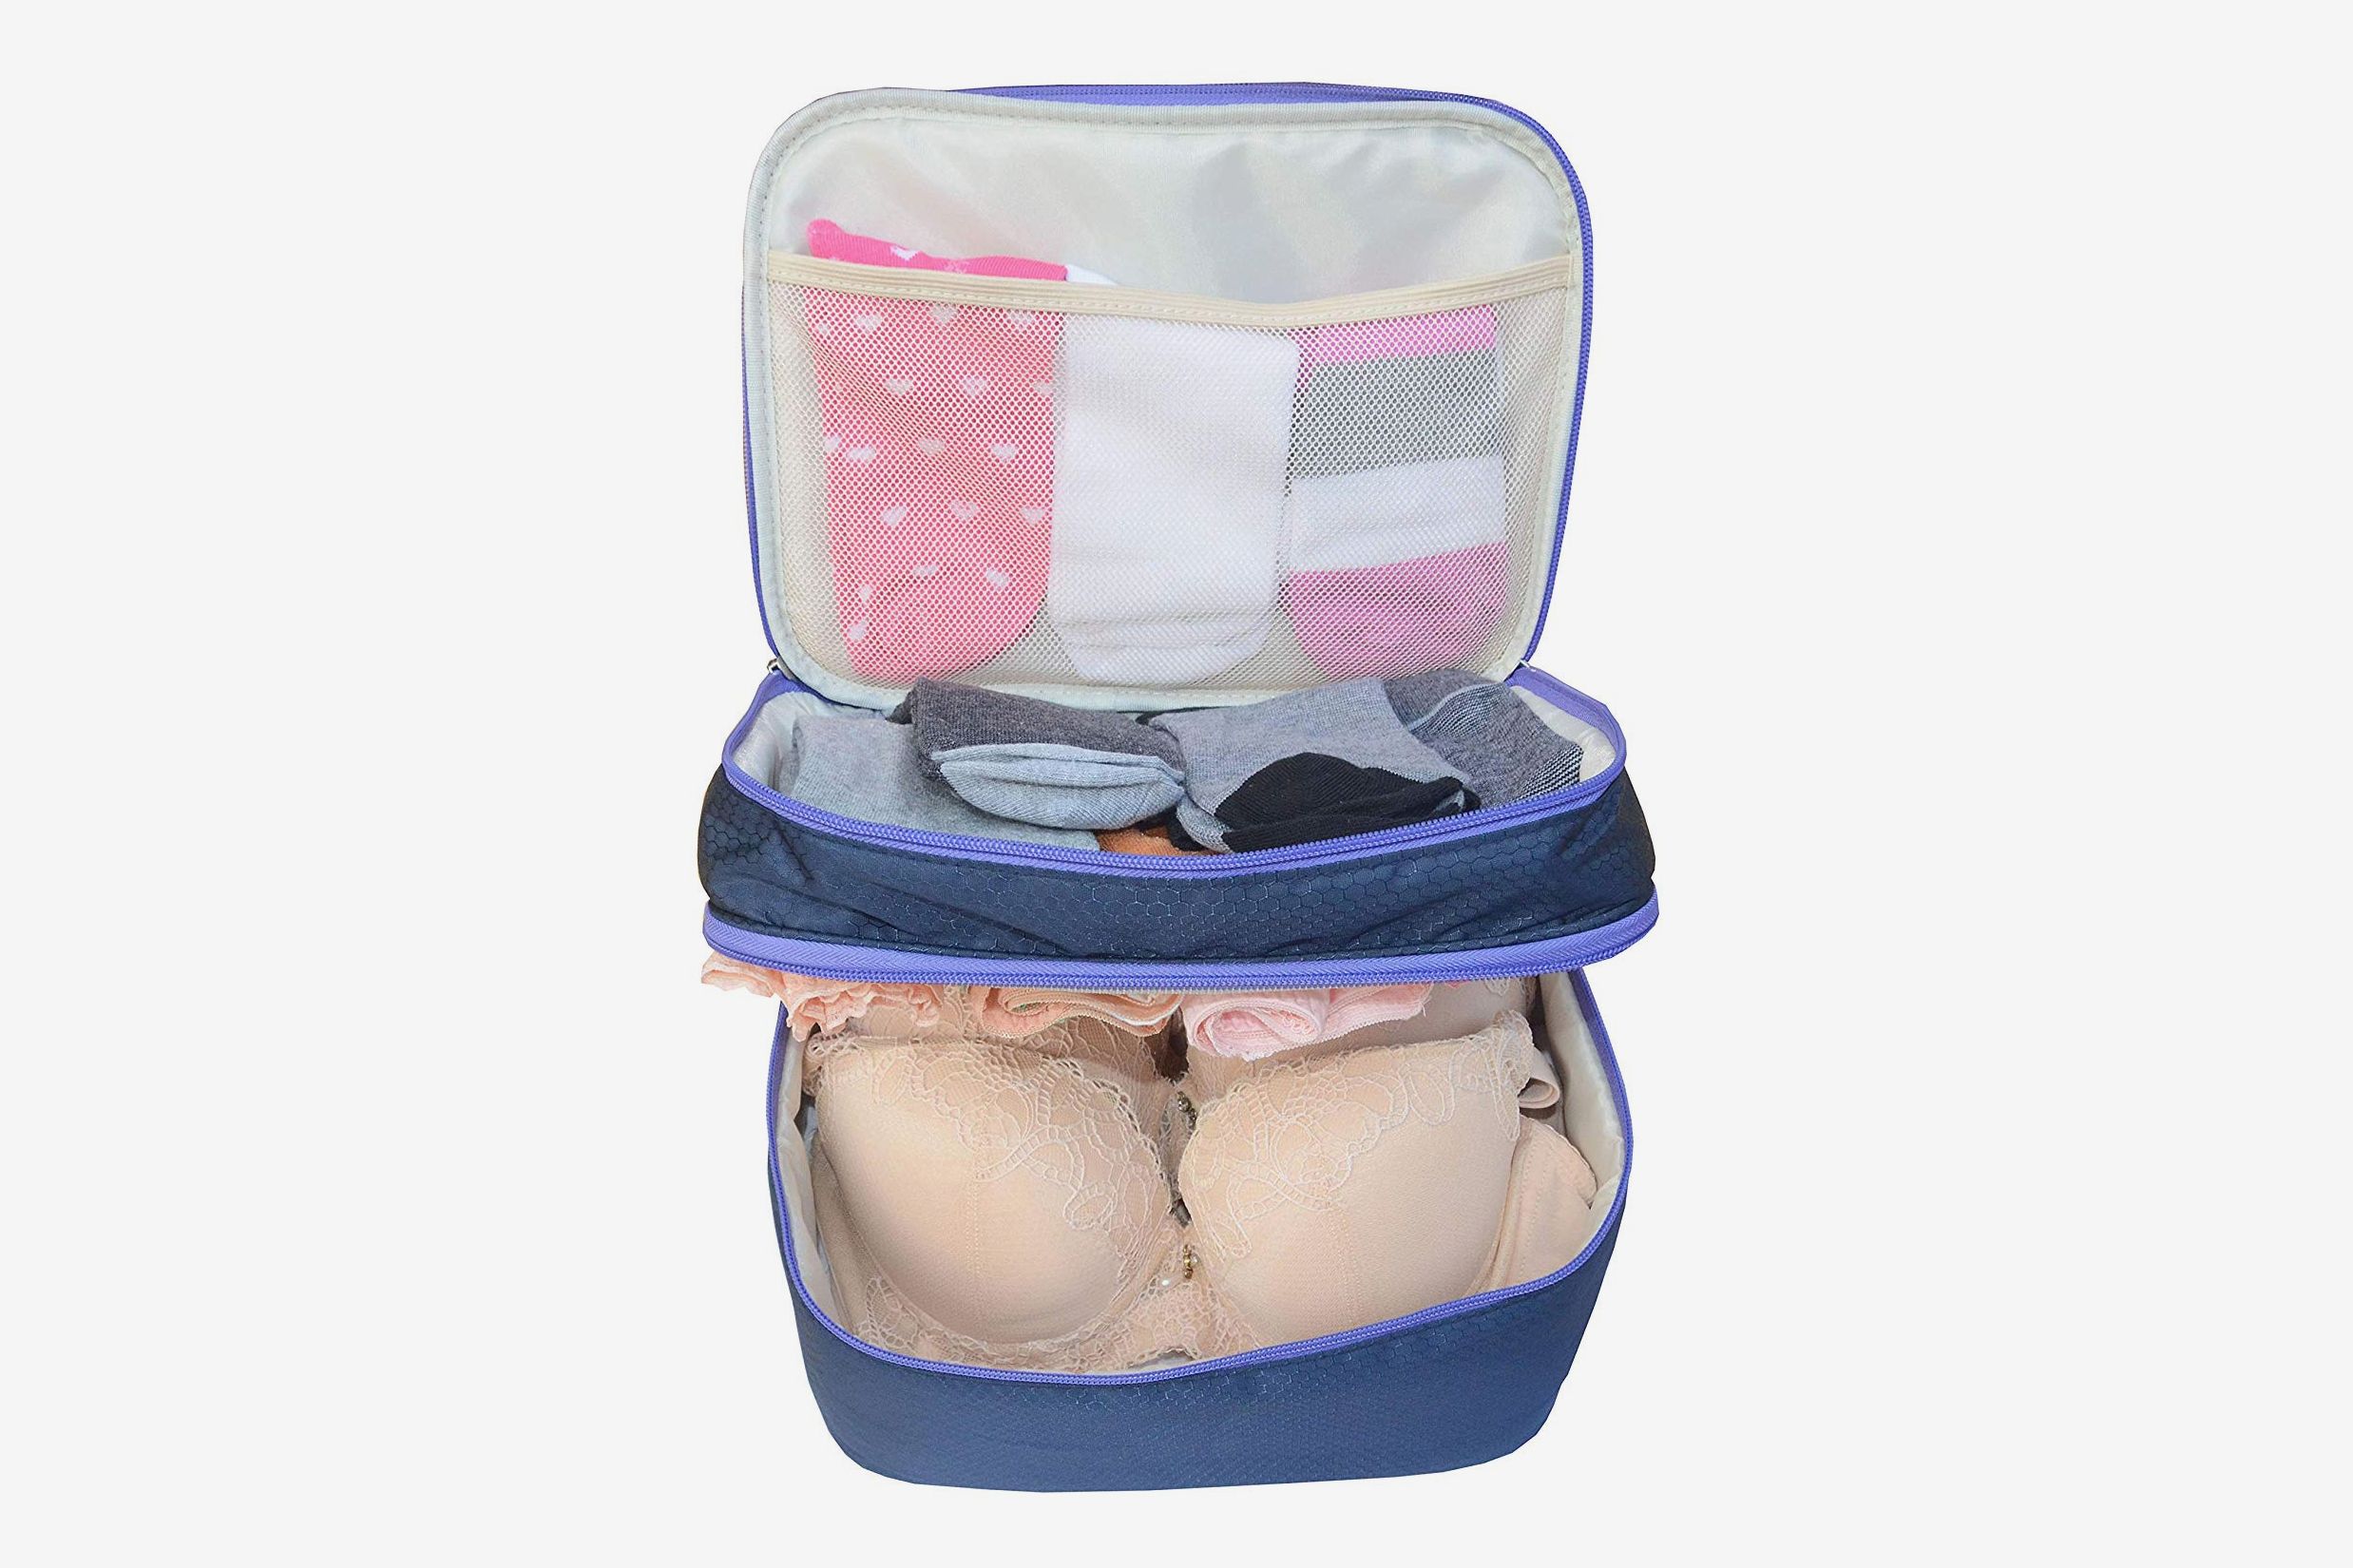 Women's Underwear Storage Bags Reusable Travel Organizer Socks